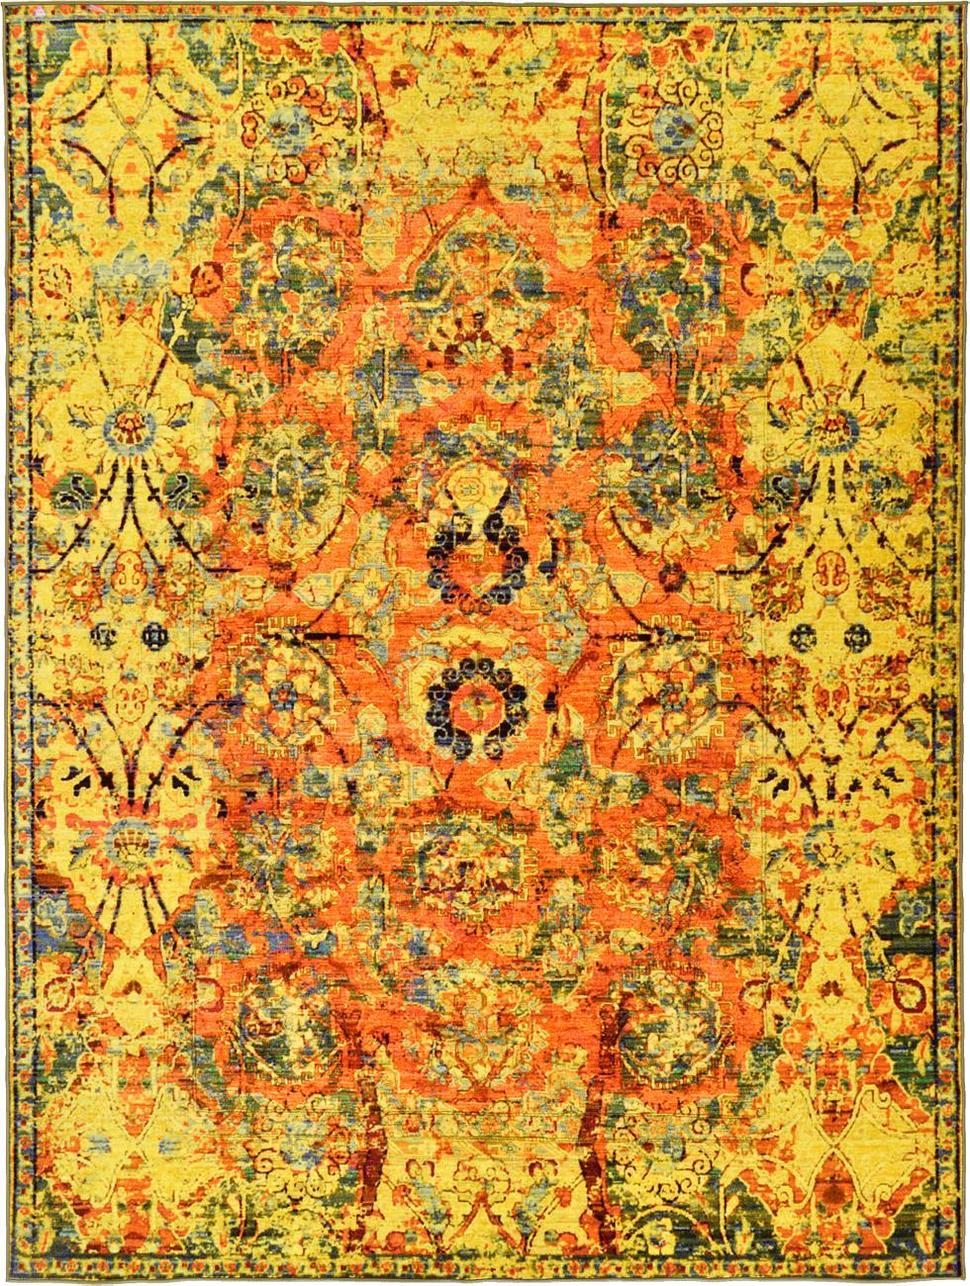 8e-yellow-turkish-eclat-area-rug.jpg